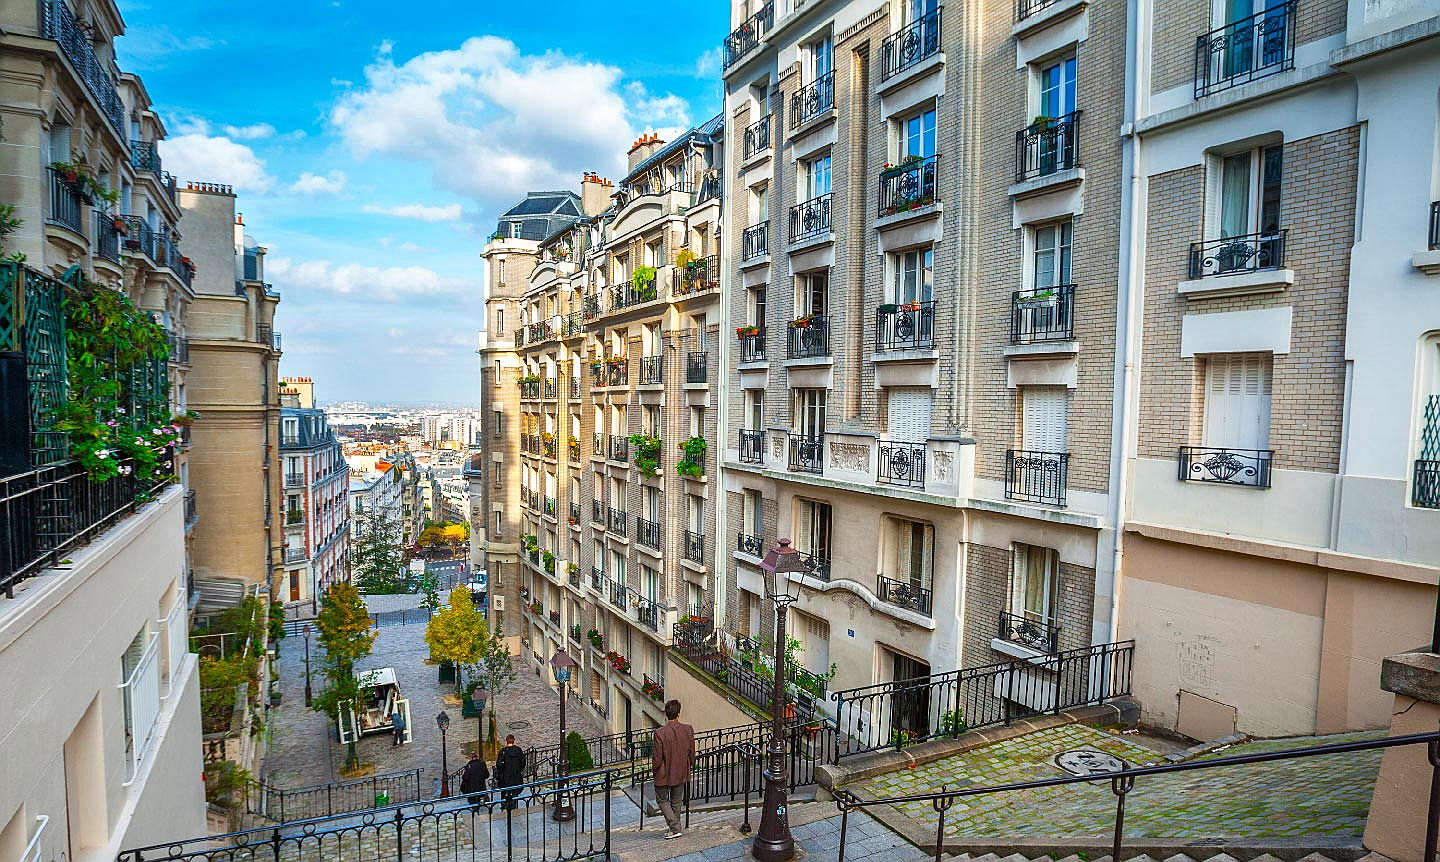  Paris
- sell real estate in paris - sell apartment in paris - engel volkers